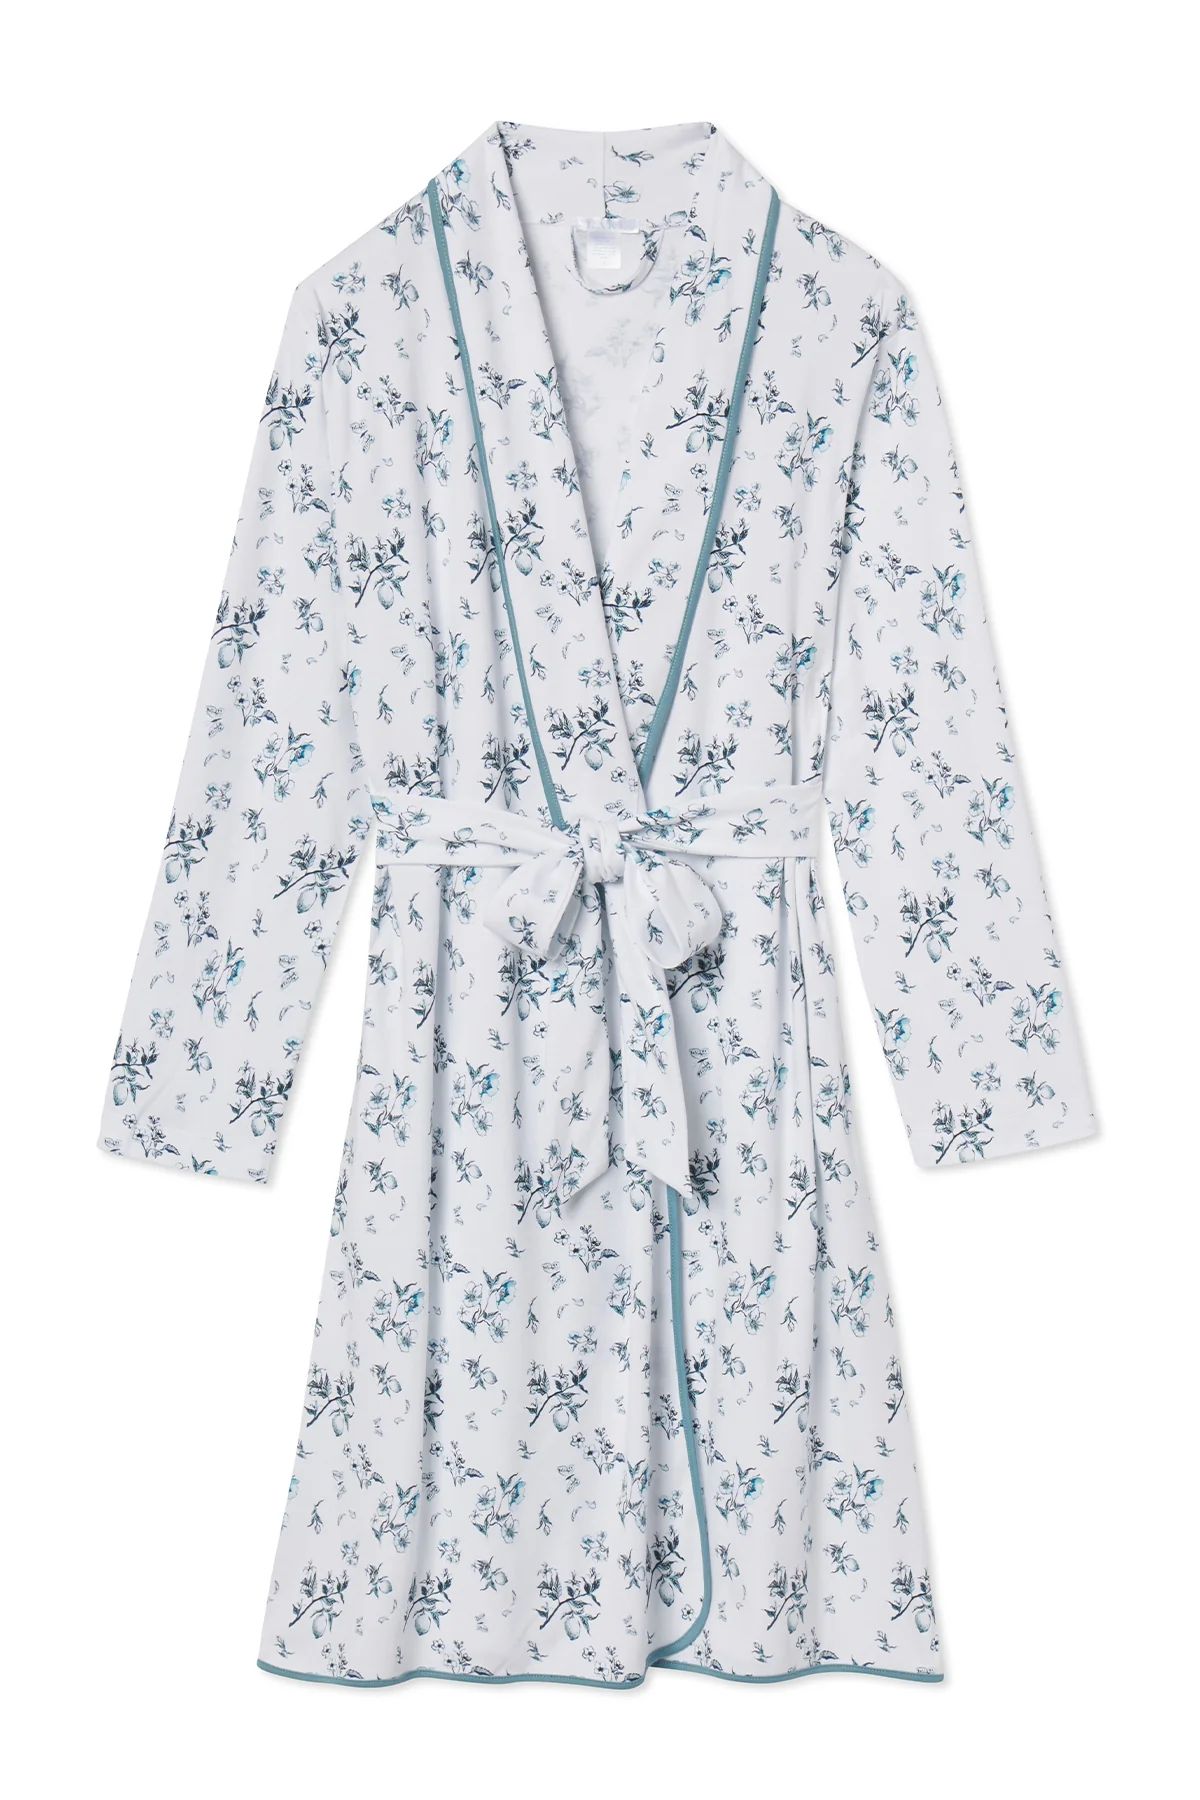 Pima Robe in Fleur | Lake Pajamas